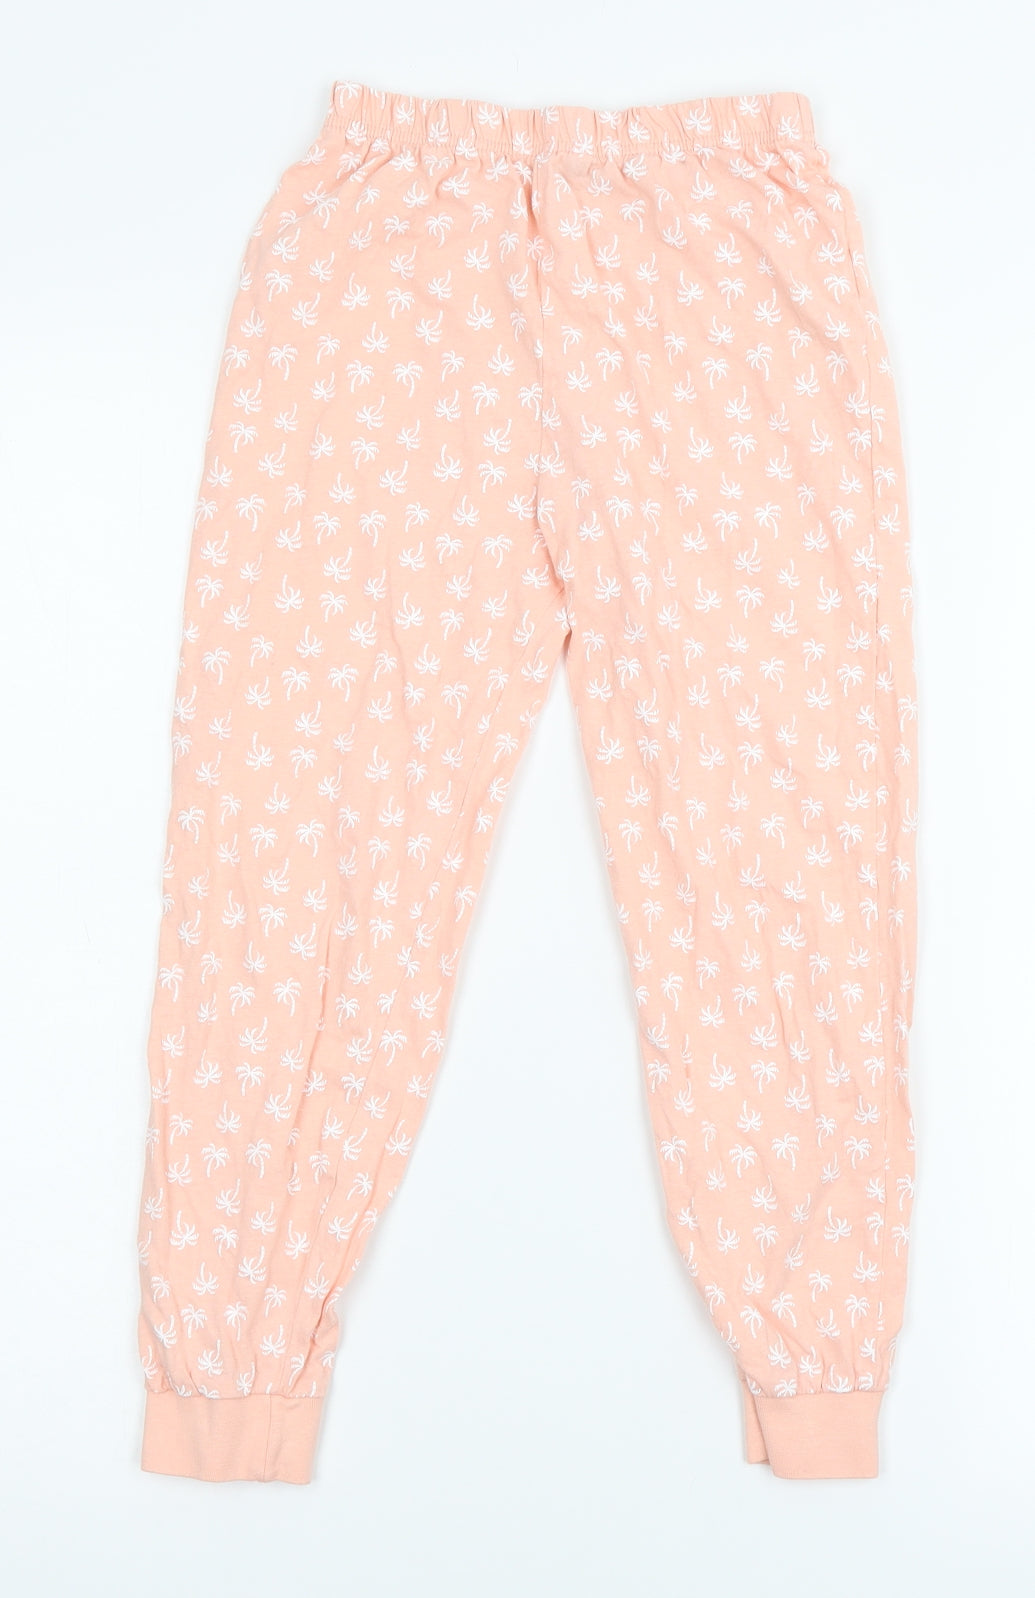 Primark Girls Pink Floral   Pyjama Pants Size 7-8 Years